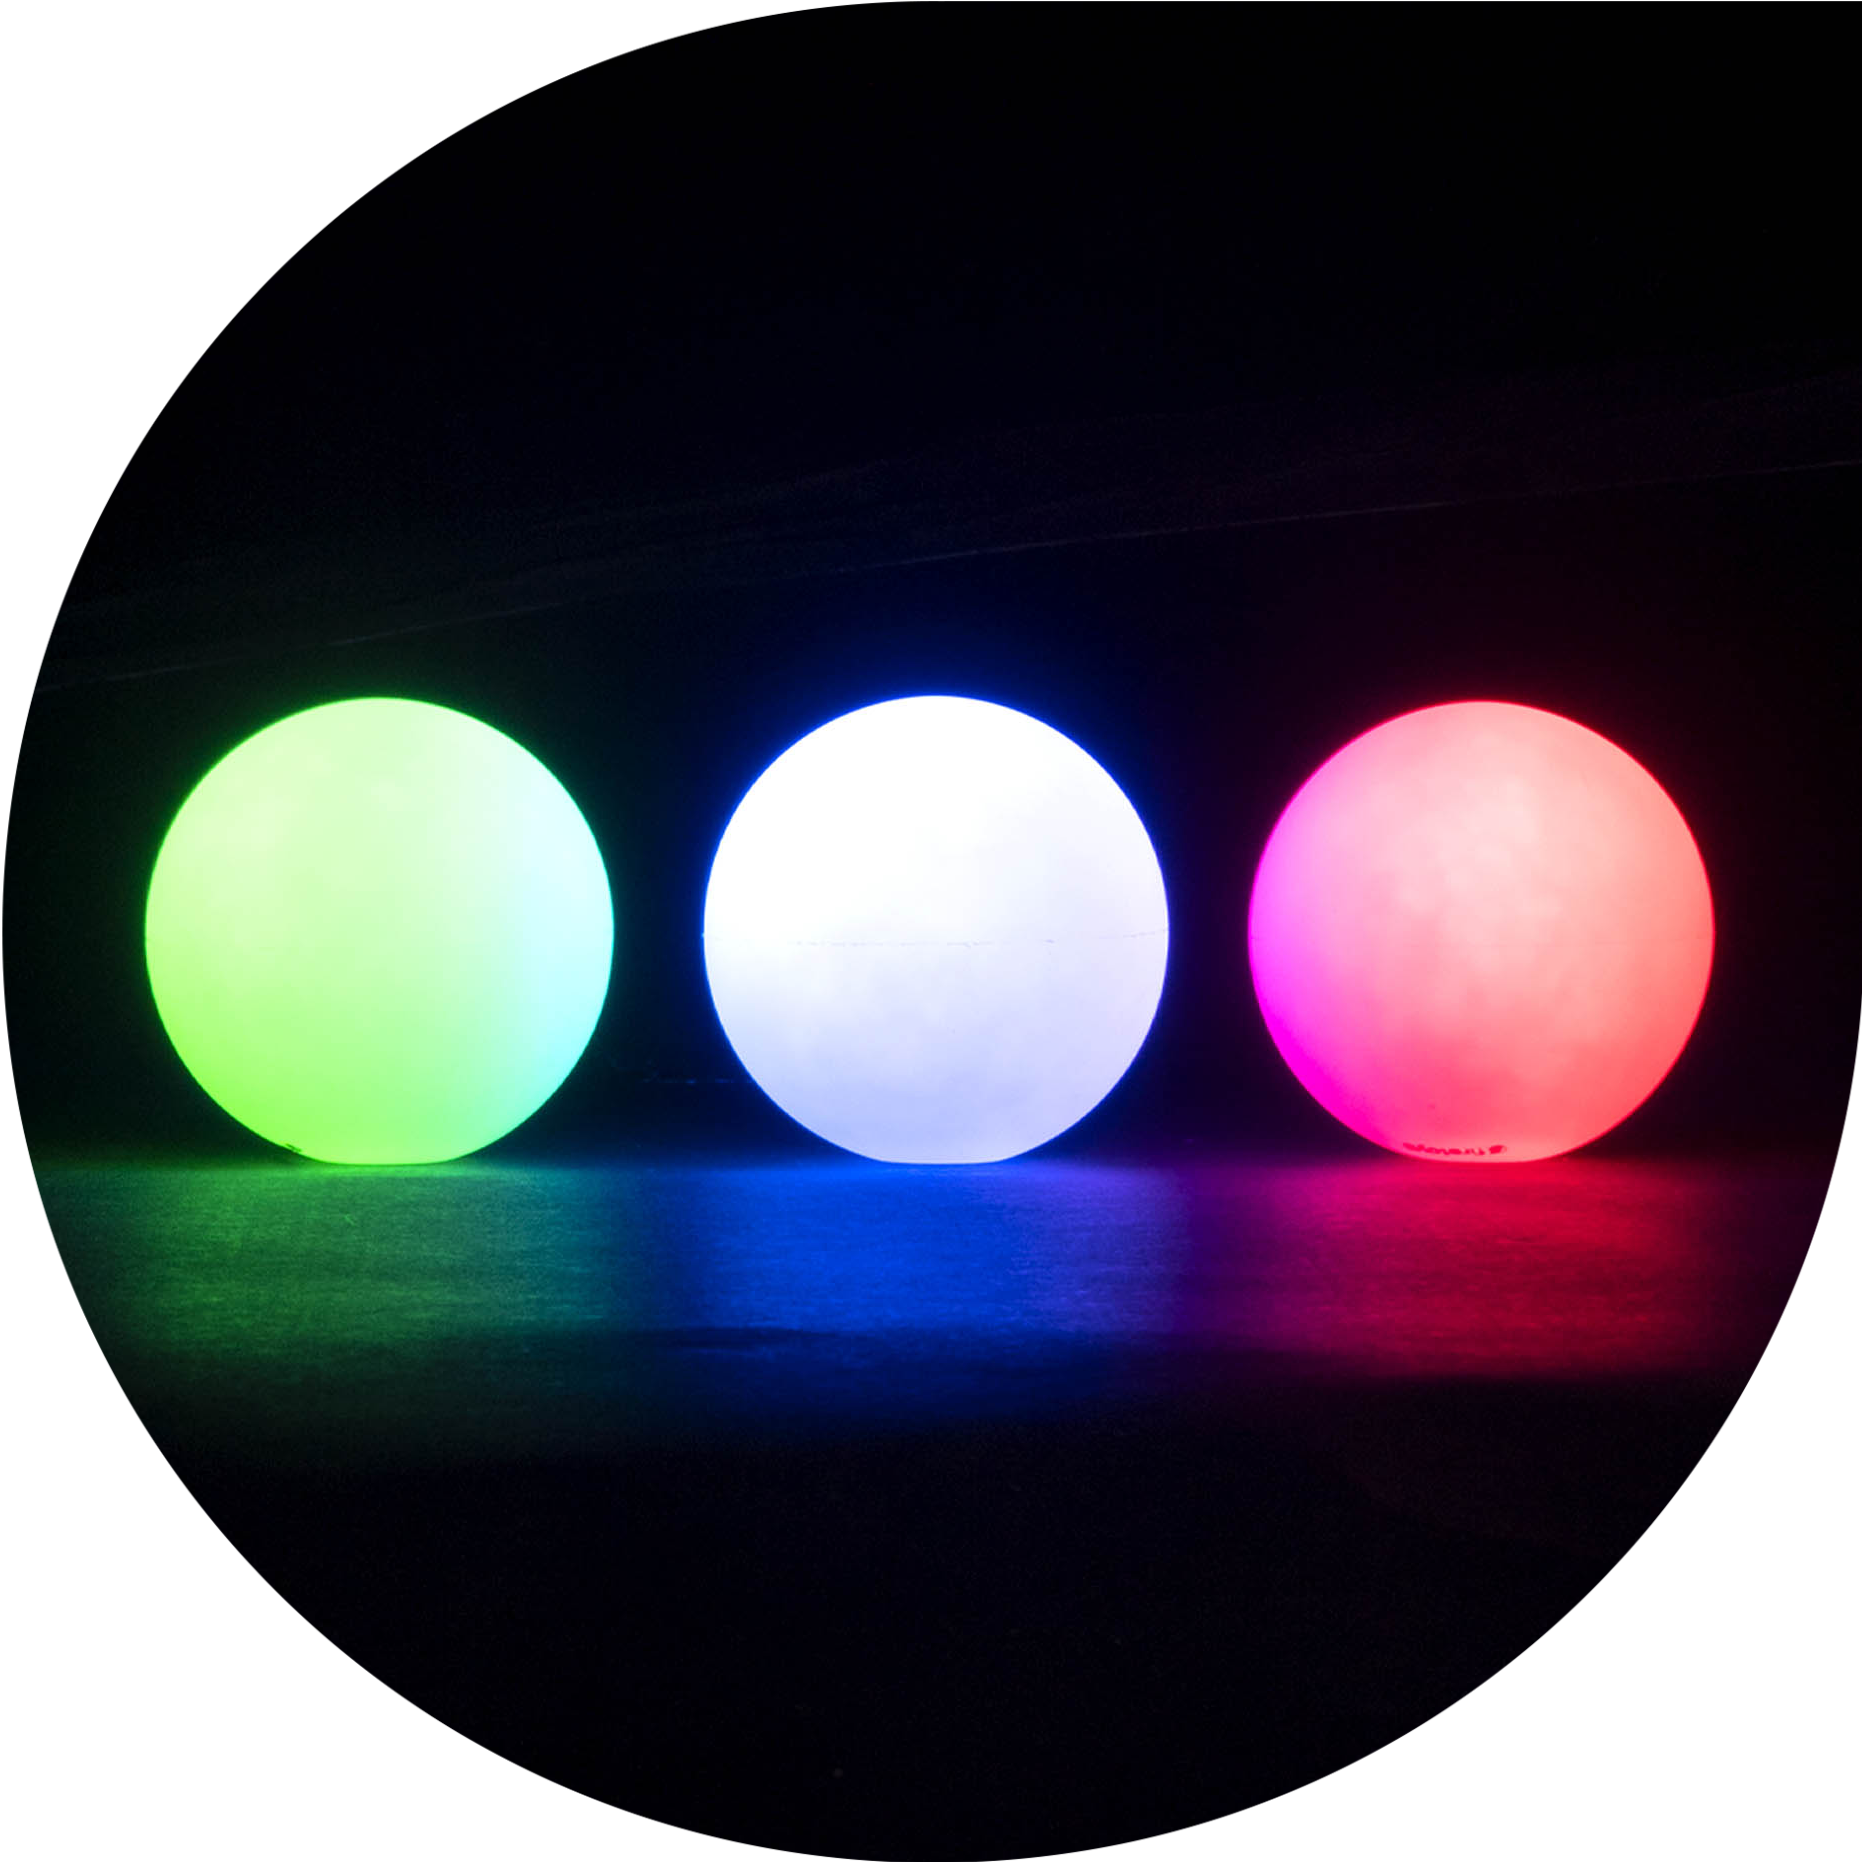 Three glowing juggling balls in a line